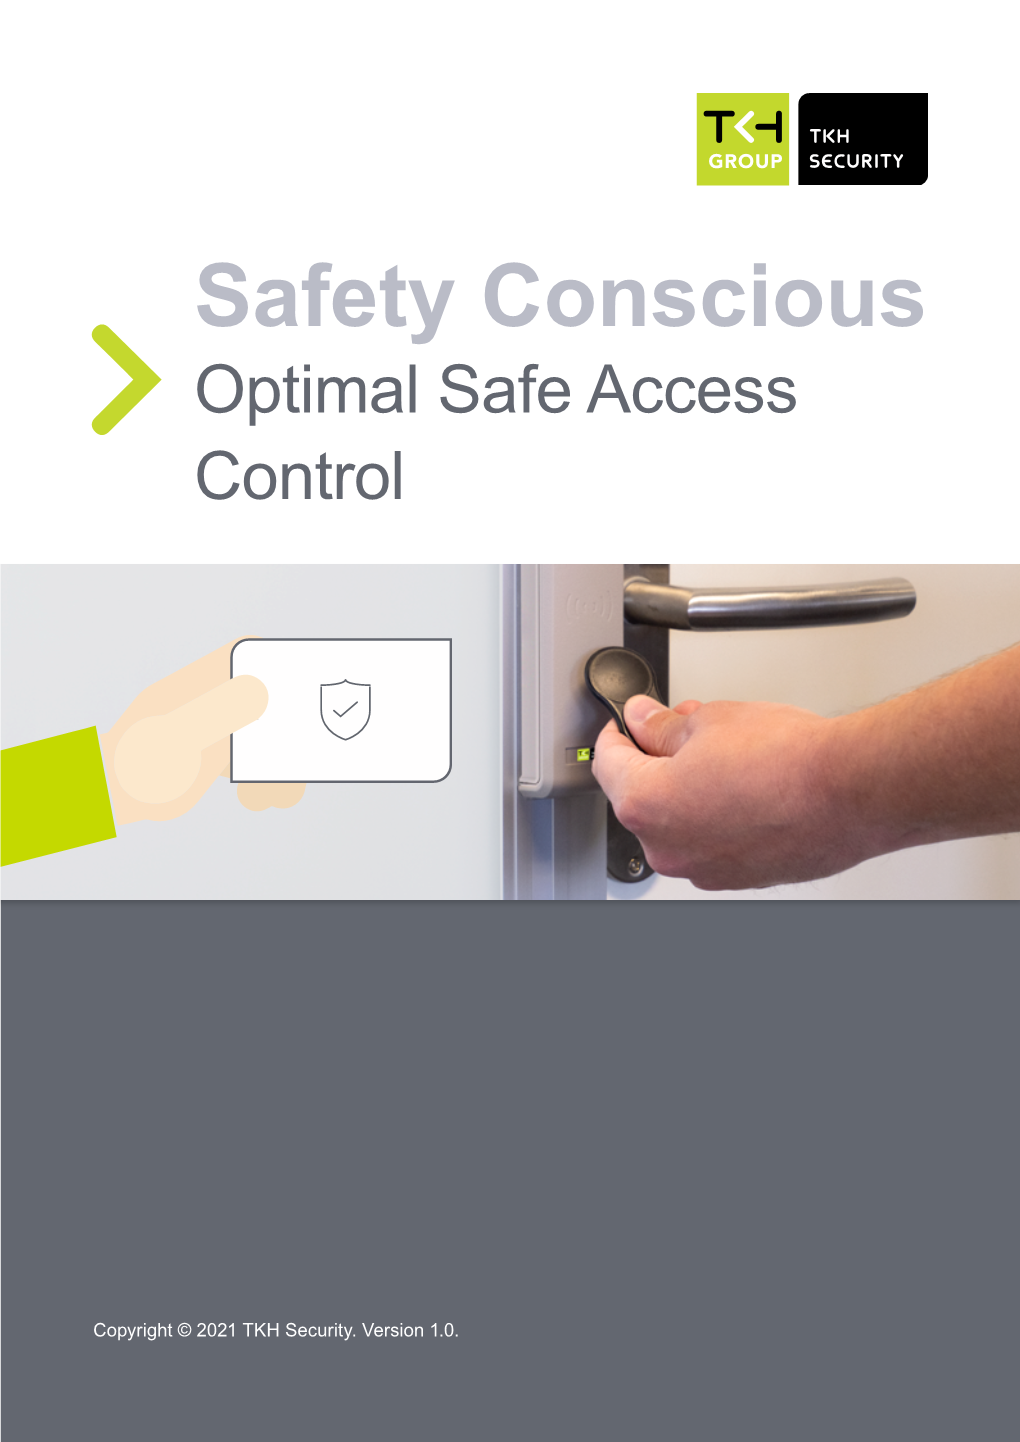 Safety Conscious Optimal Safe Access Control